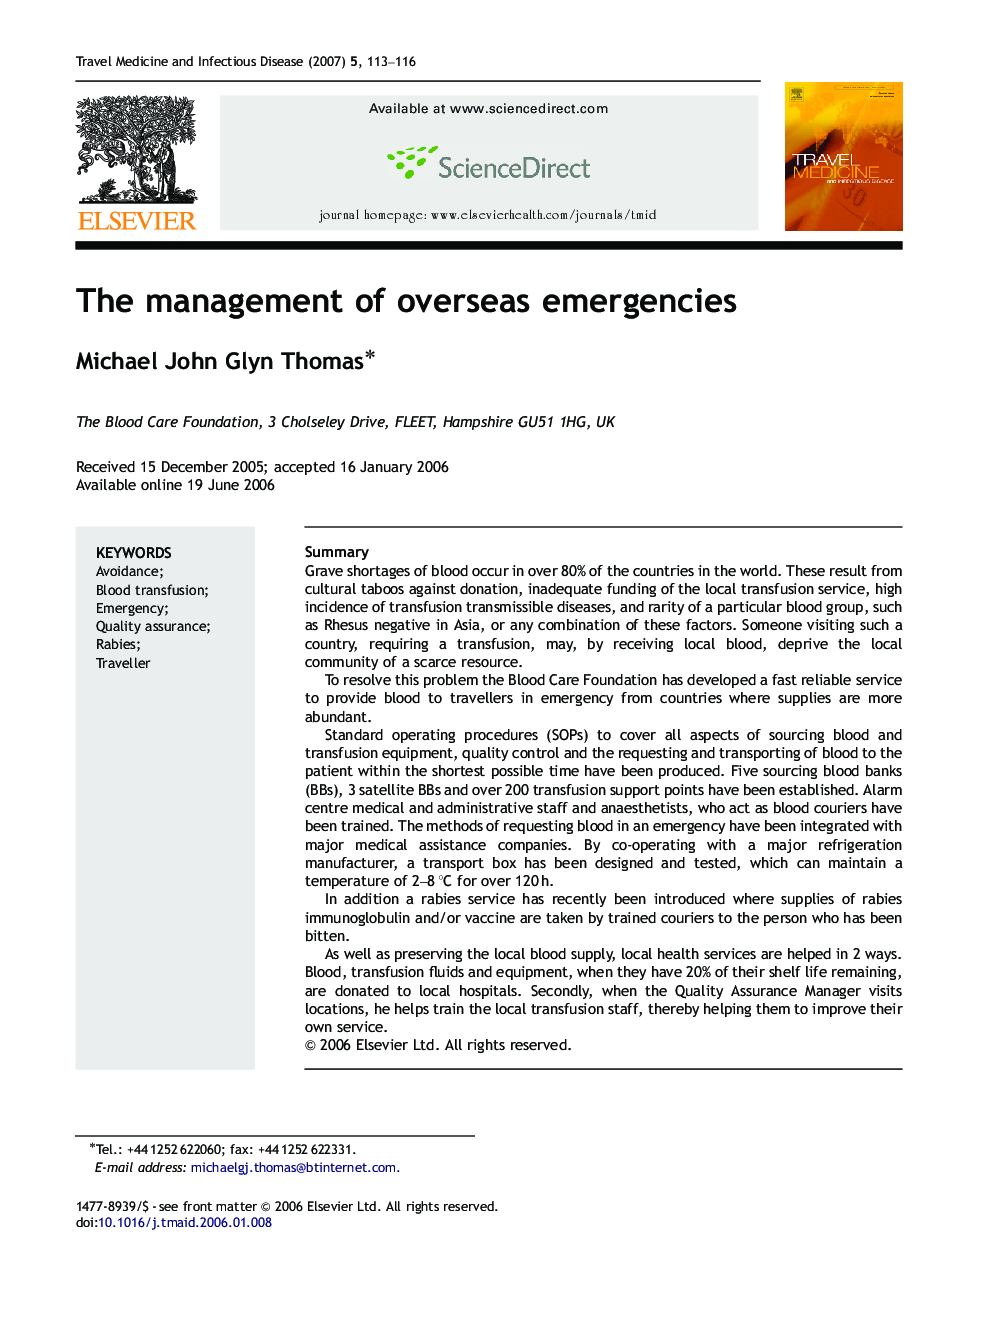 The management of overseas emergencies